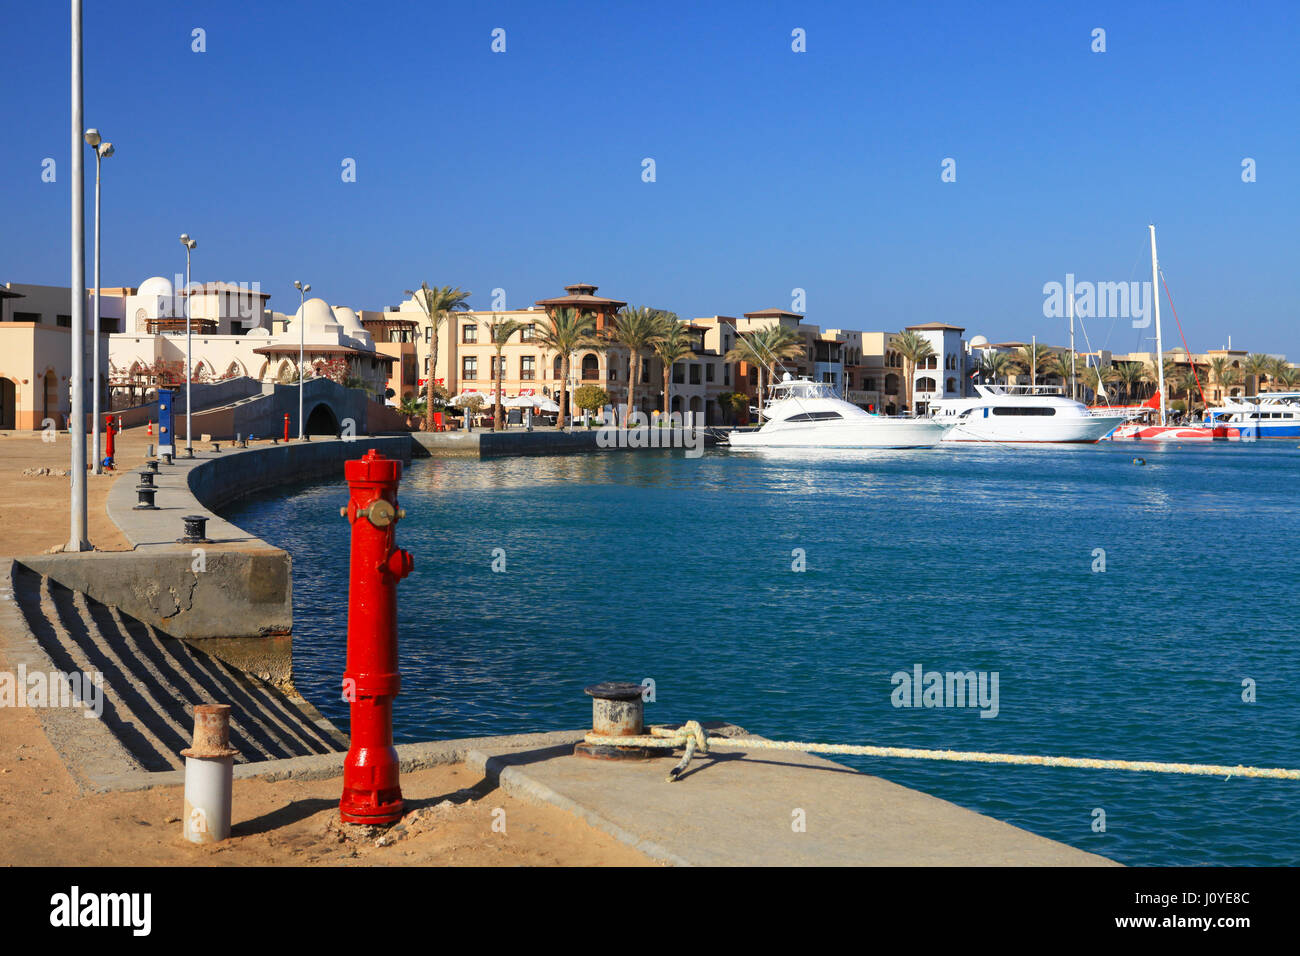 PORT GHALIB, EGYPT - APRIL 02, 2017: Port Ghalib, a beautiful port, marina and tourist town near Marsa Alam, Egypt Stock Photo